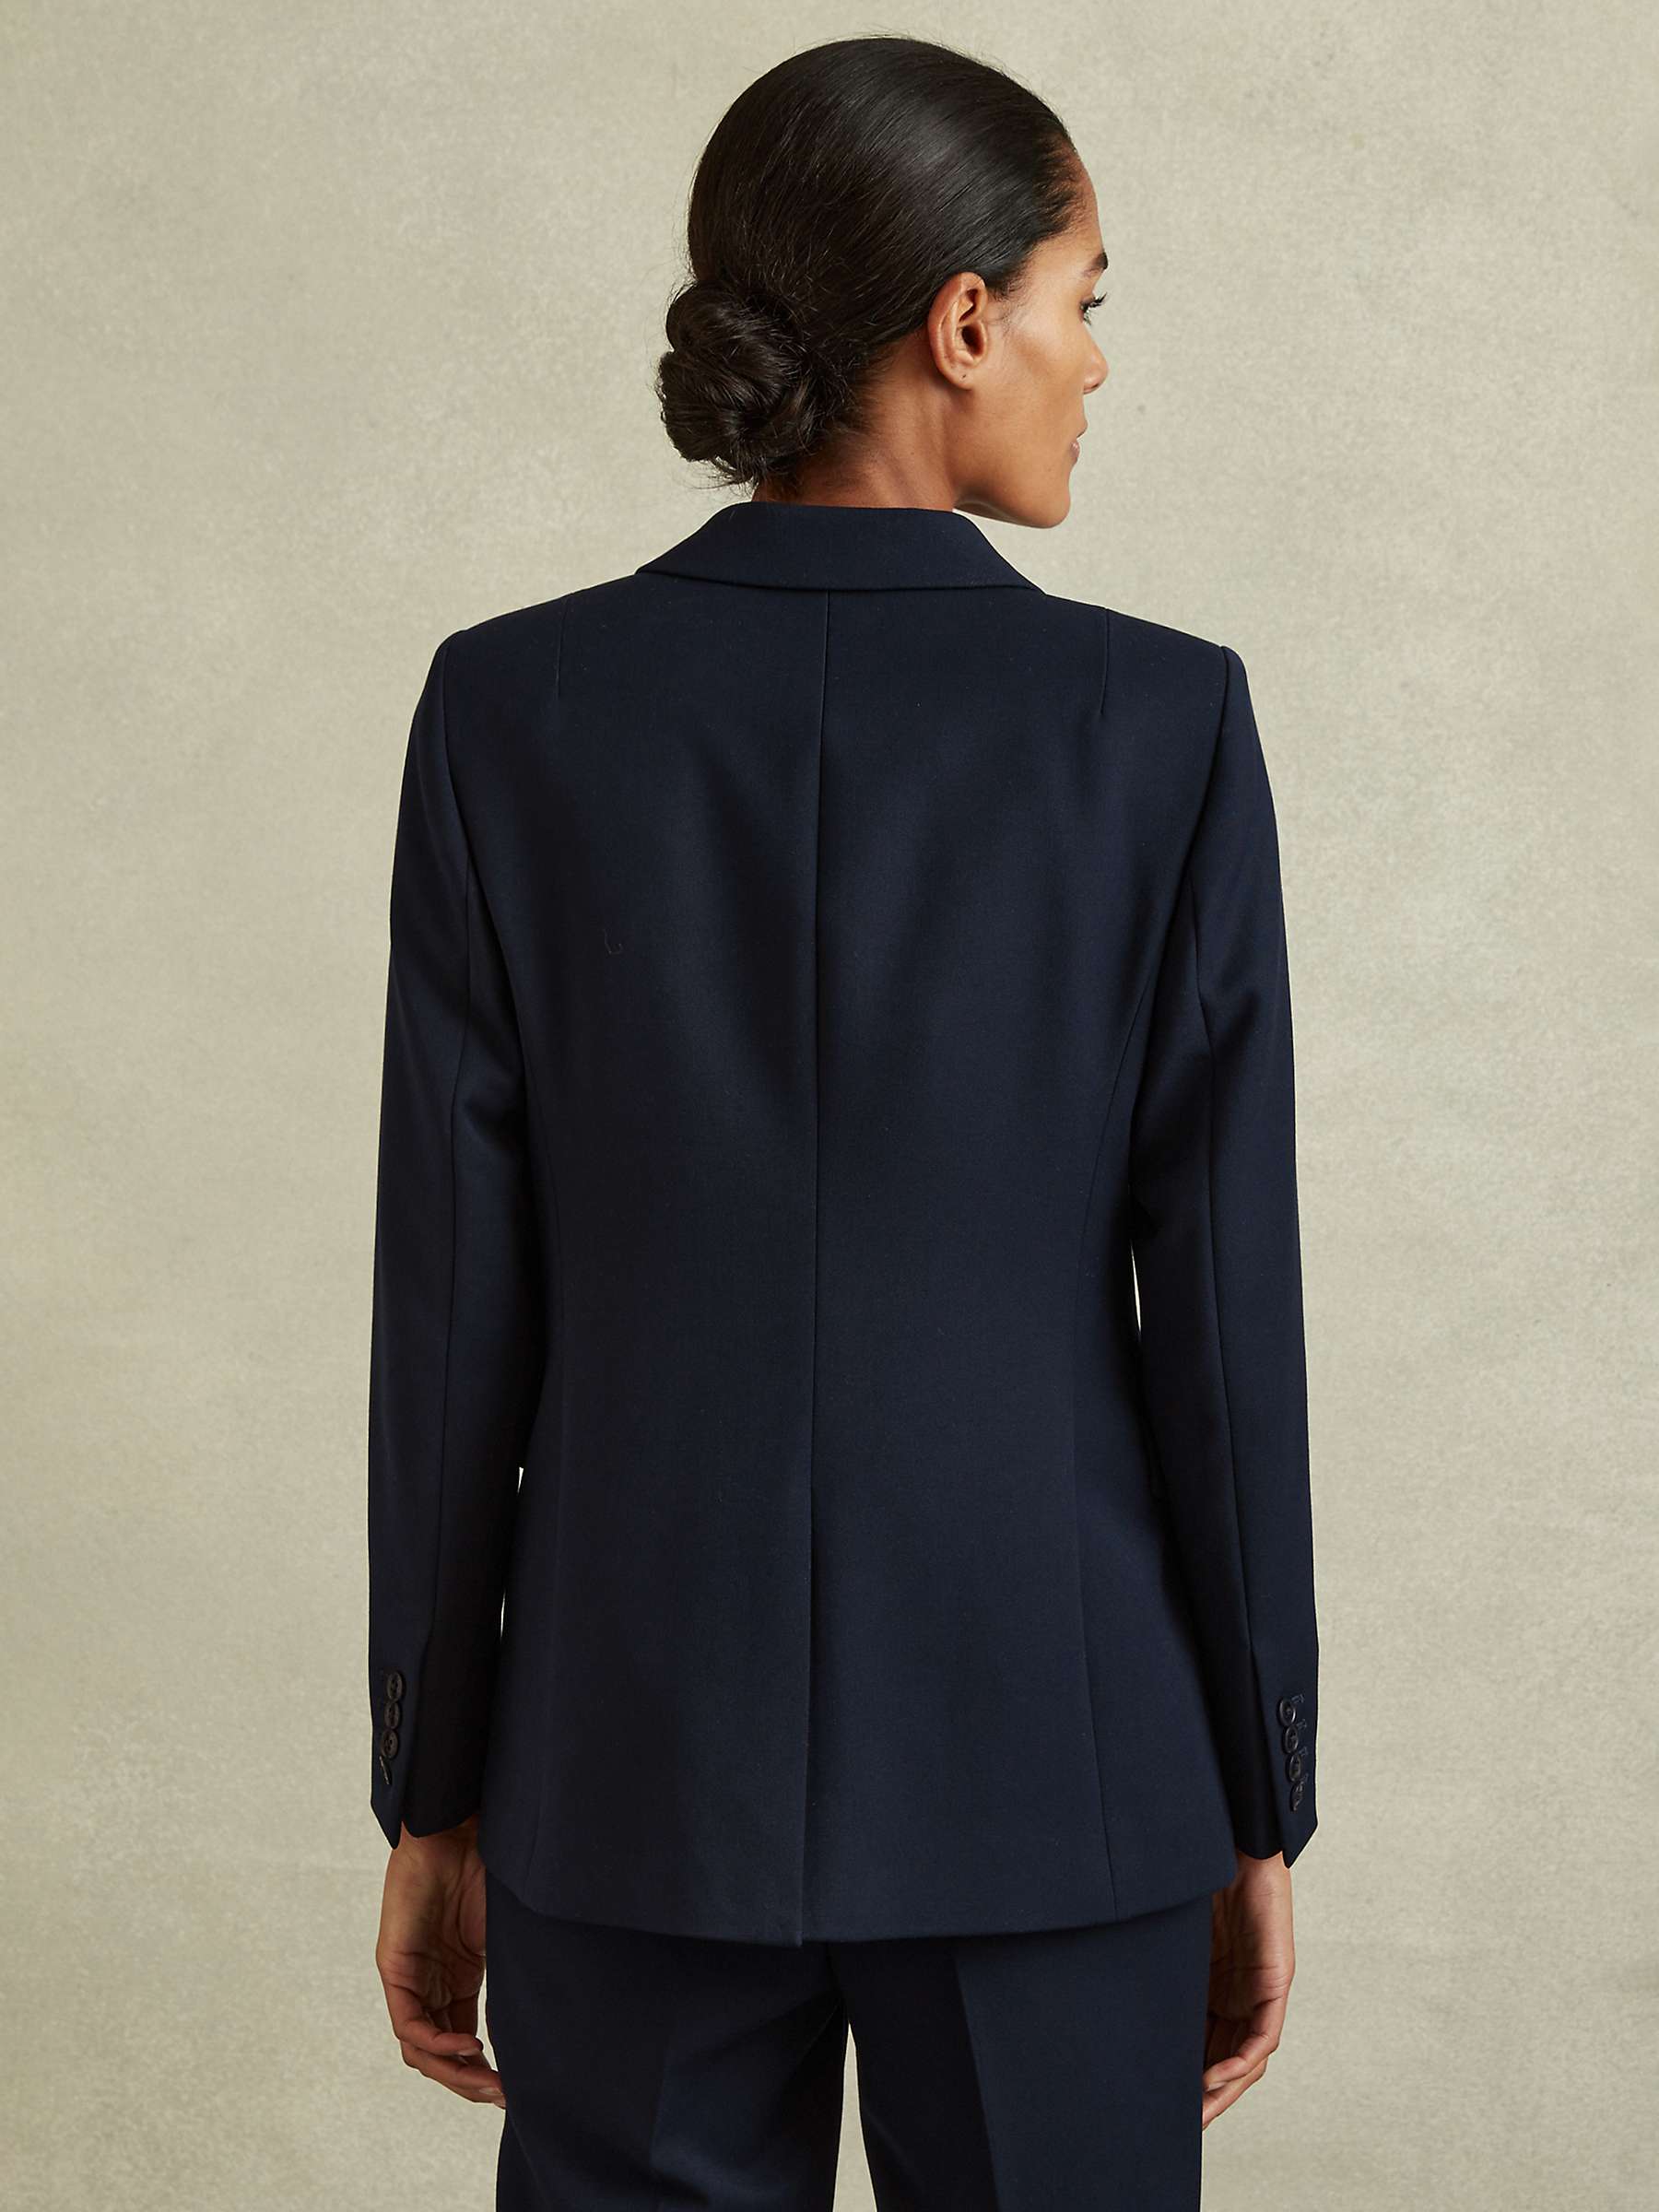 Buy Reiss Gabi Tailored Single Breasted Suit Blazer Online at johnlewis.com